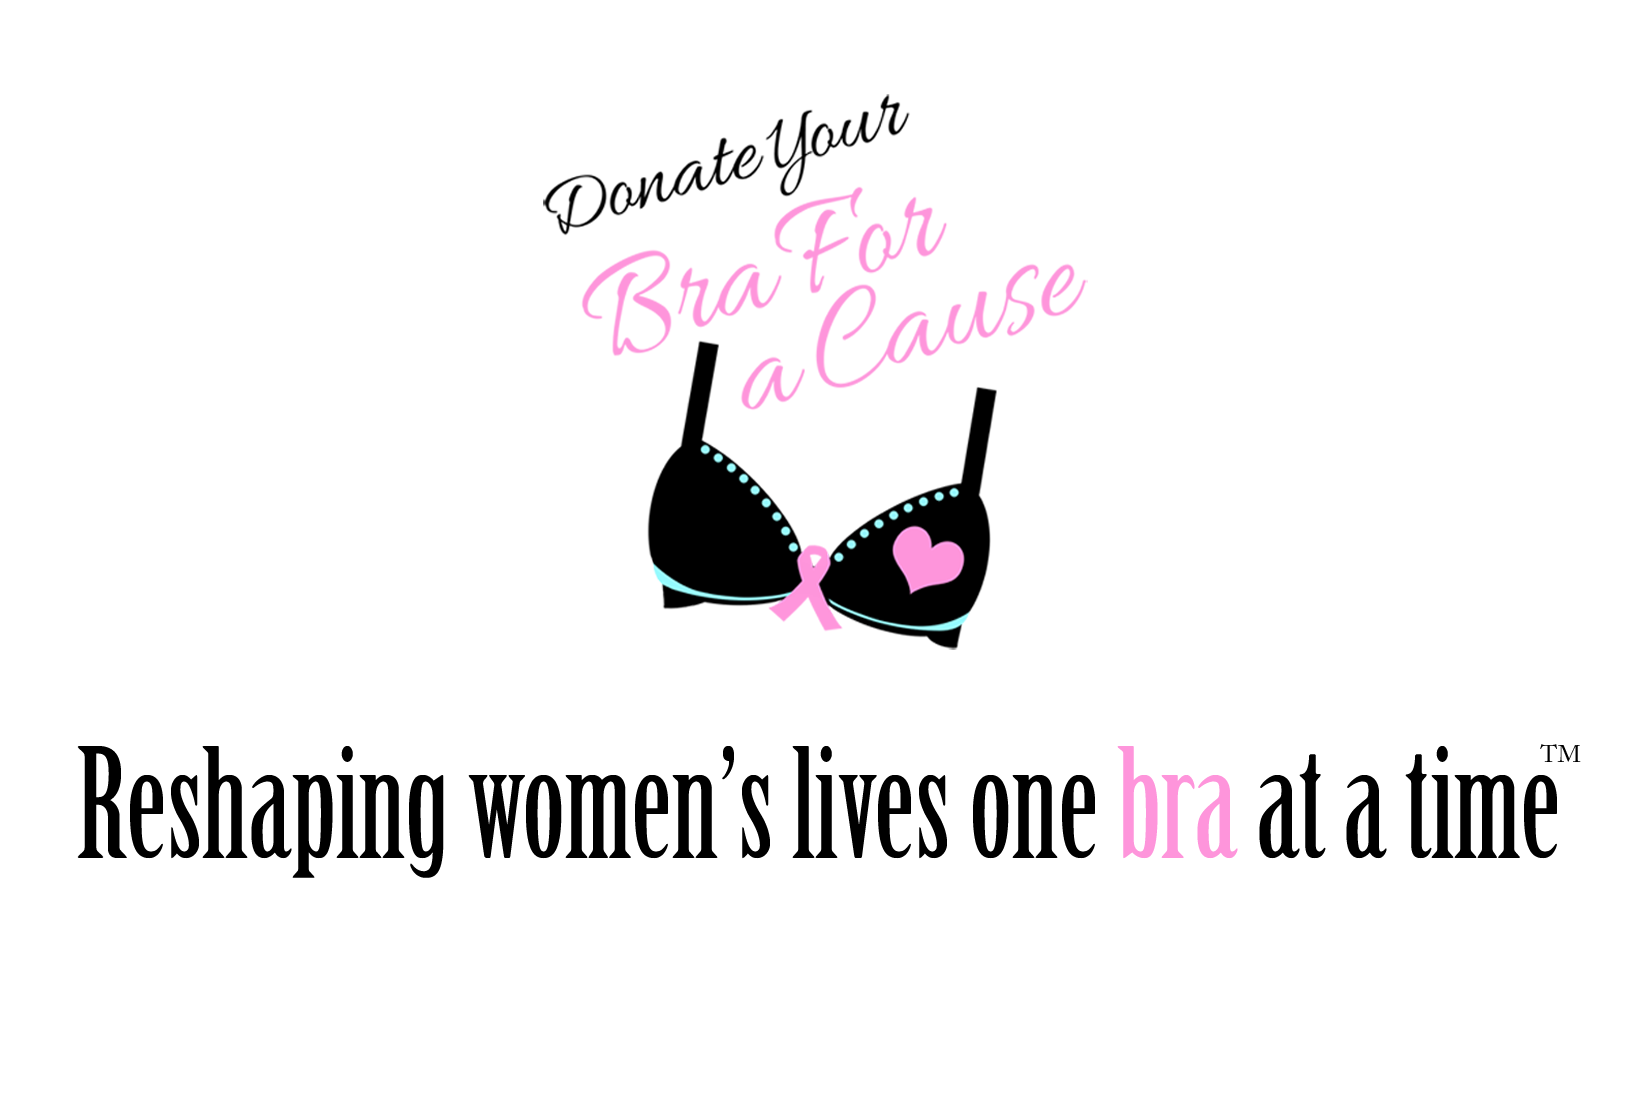 Help Us Reshape Women's Lives